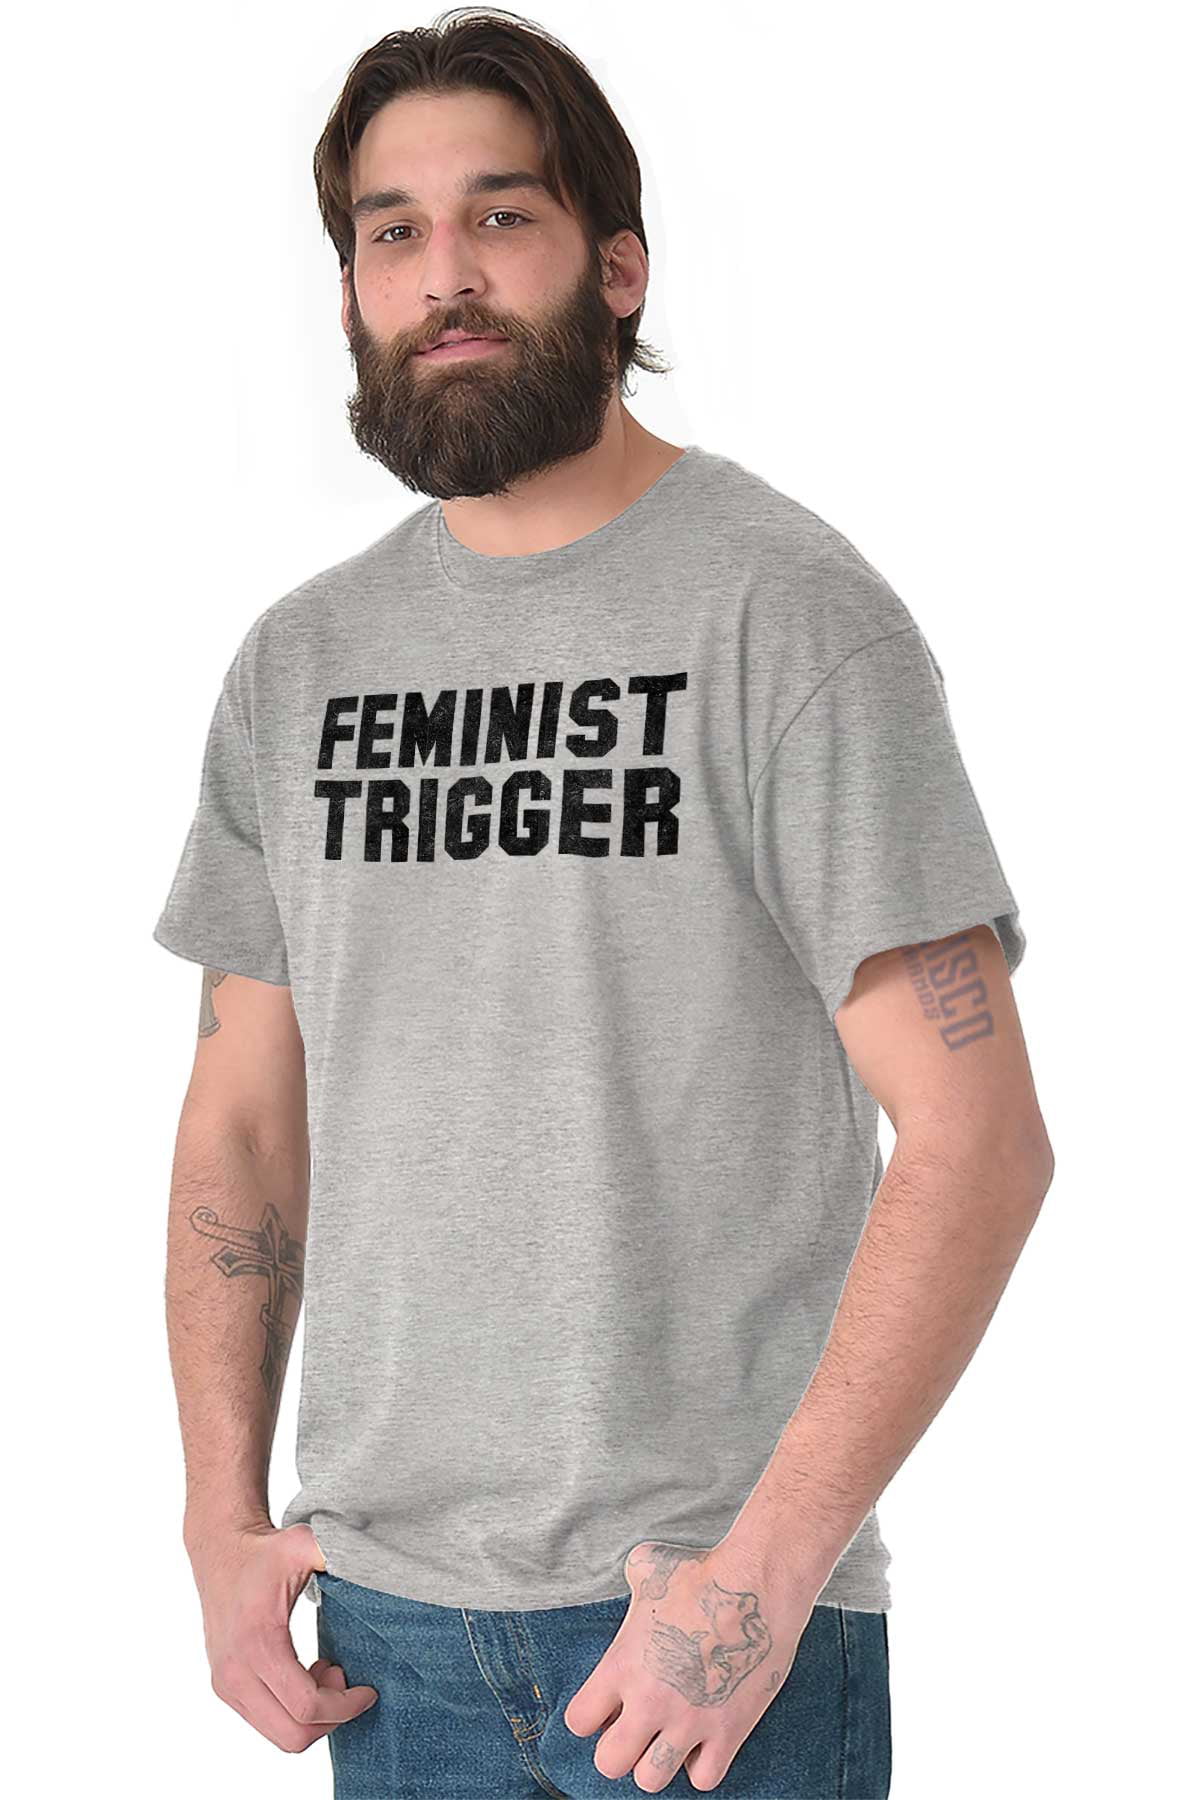 Feminist Trigger Sarcastic Rude Political Short Sleeve T-Shirt Tees Tshirts 